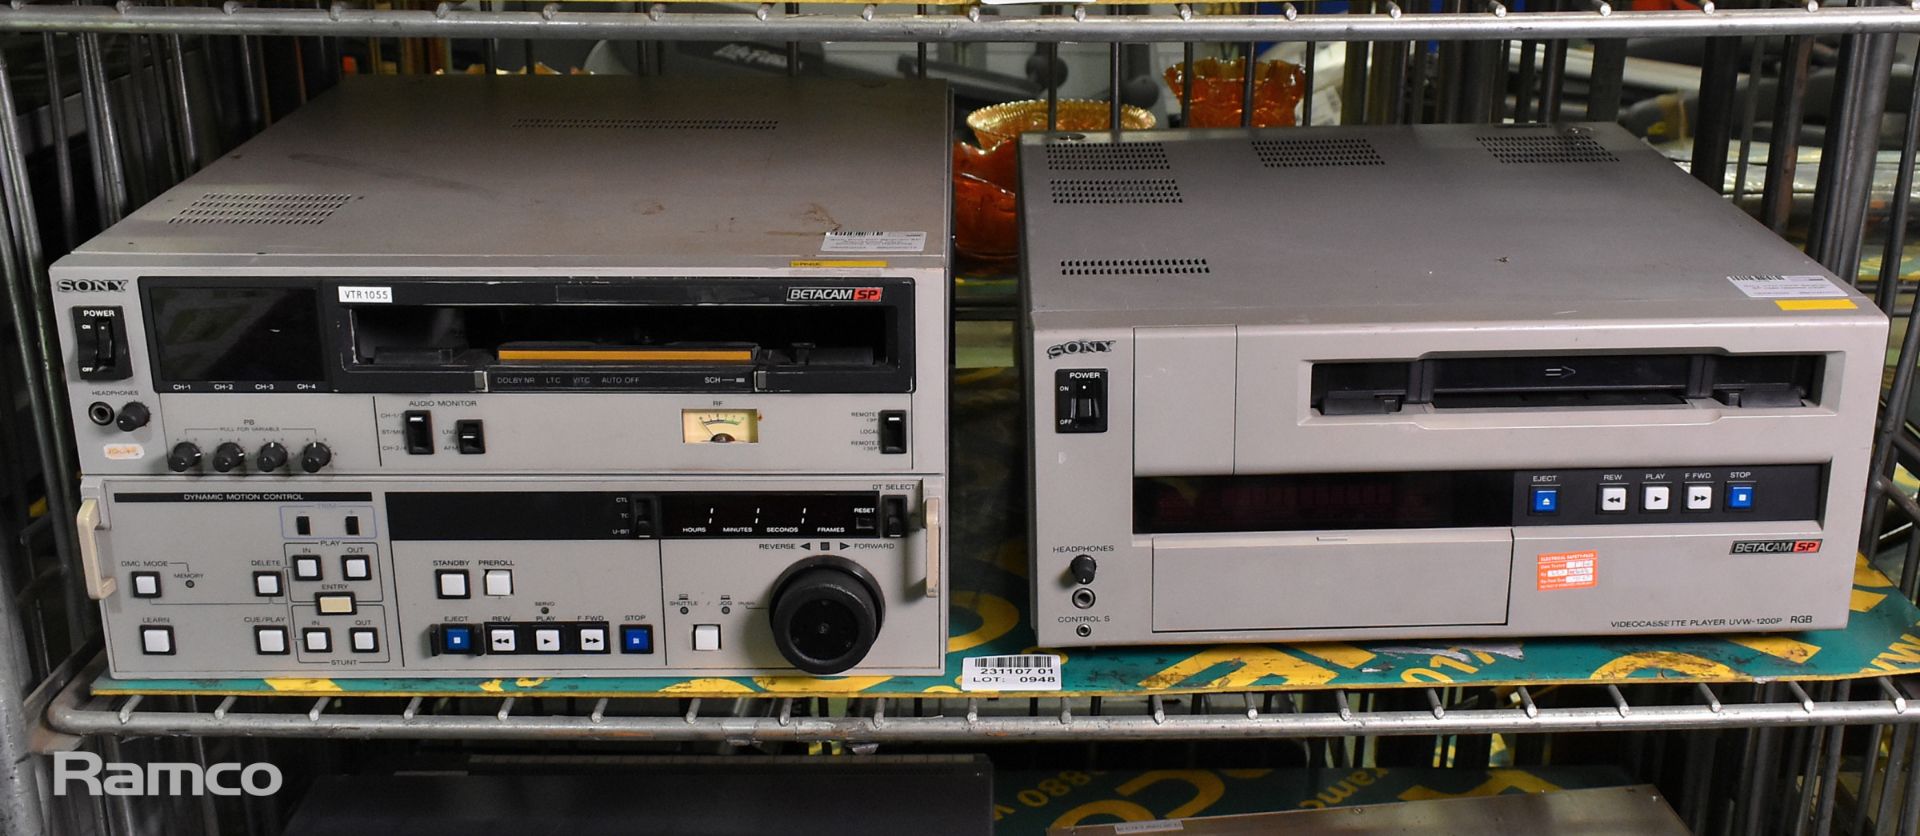 Sony UVW-1200P BetaCam SP video cassette player, Sony BVW-65P BetaCam SP videocassette player SPARES